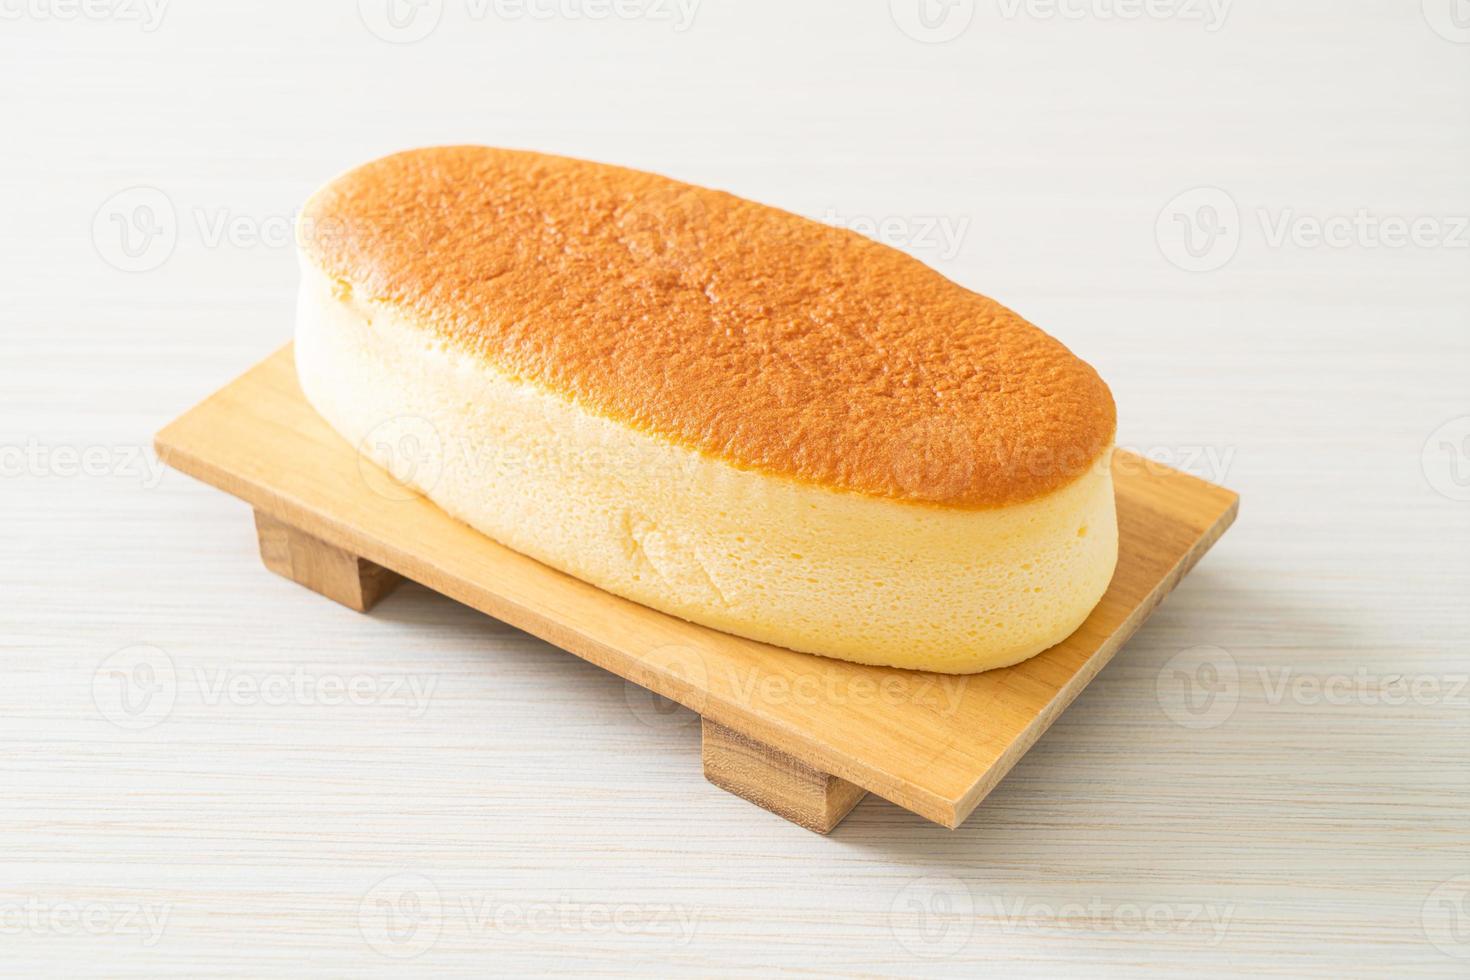 tarta de queso al estilo japonés foto